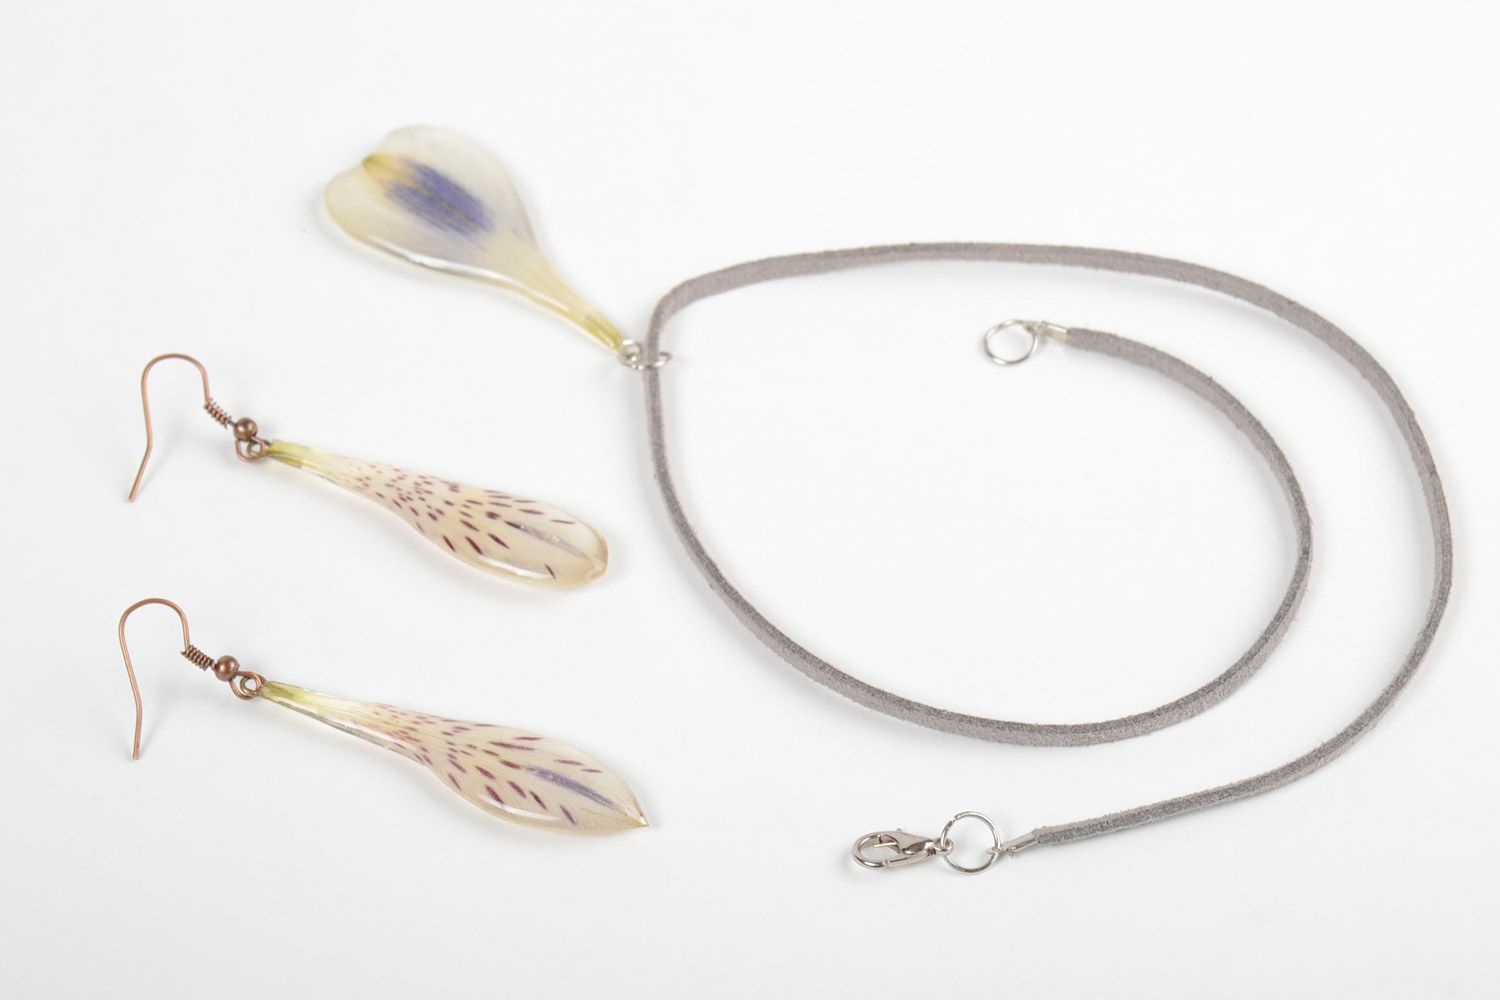 Handmade botanical jewelry set 2 items epoxy resin pendant and earrings photo 5